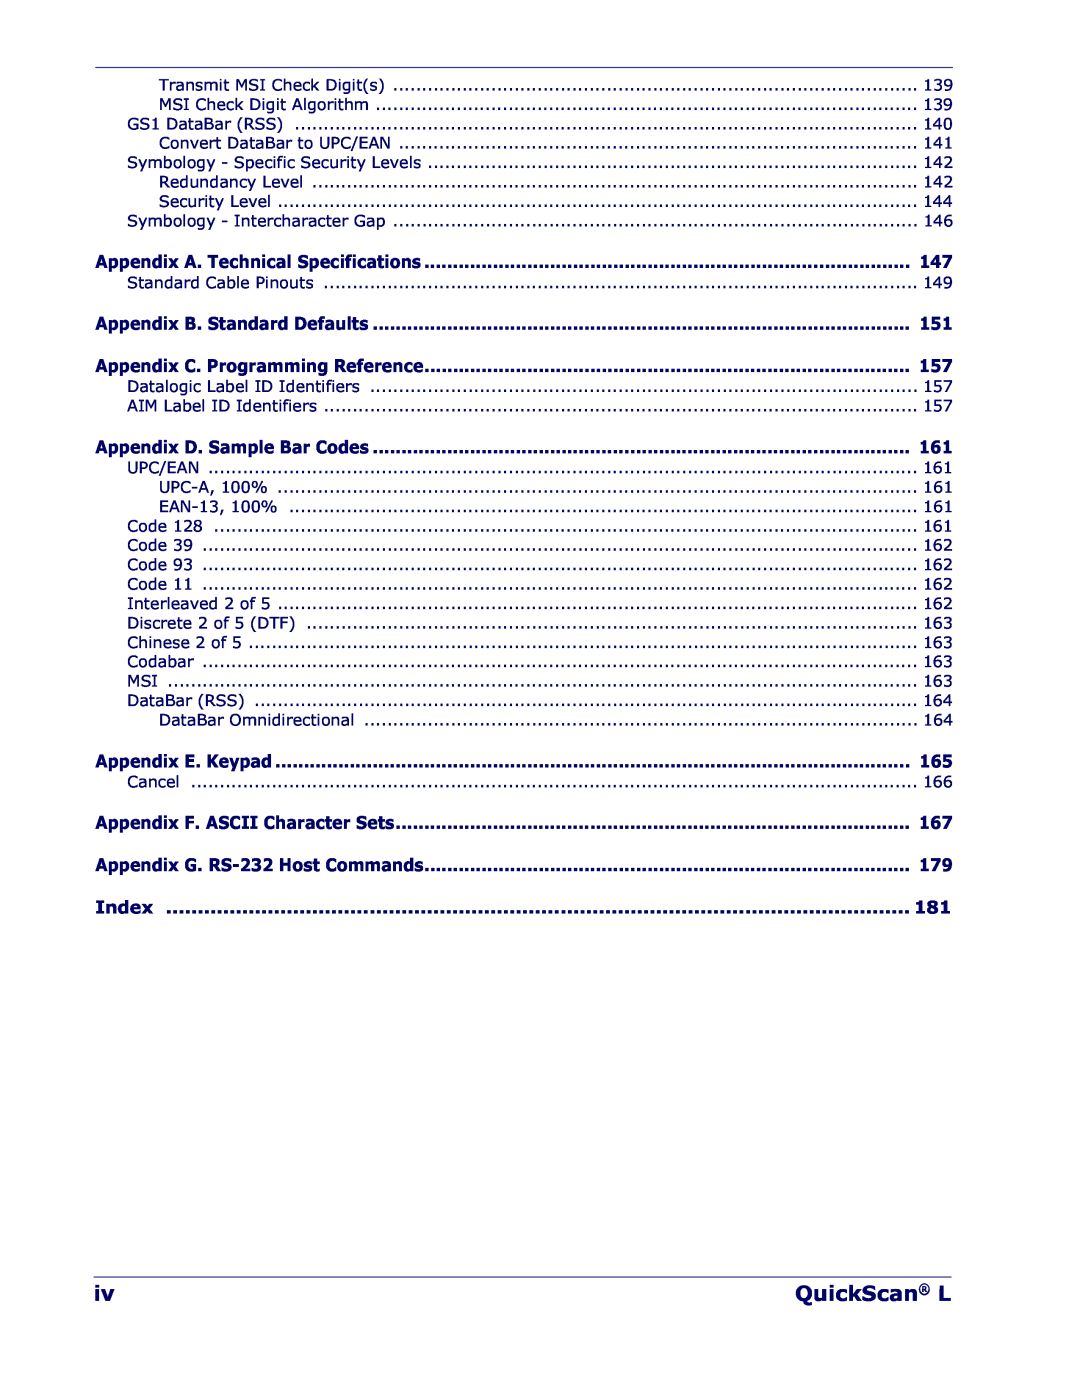 Datalogic Scanning QD 2300 manual QuickScan L, Appendix A. Technical Specifications, Appendix B. Standard Defaults, Index 